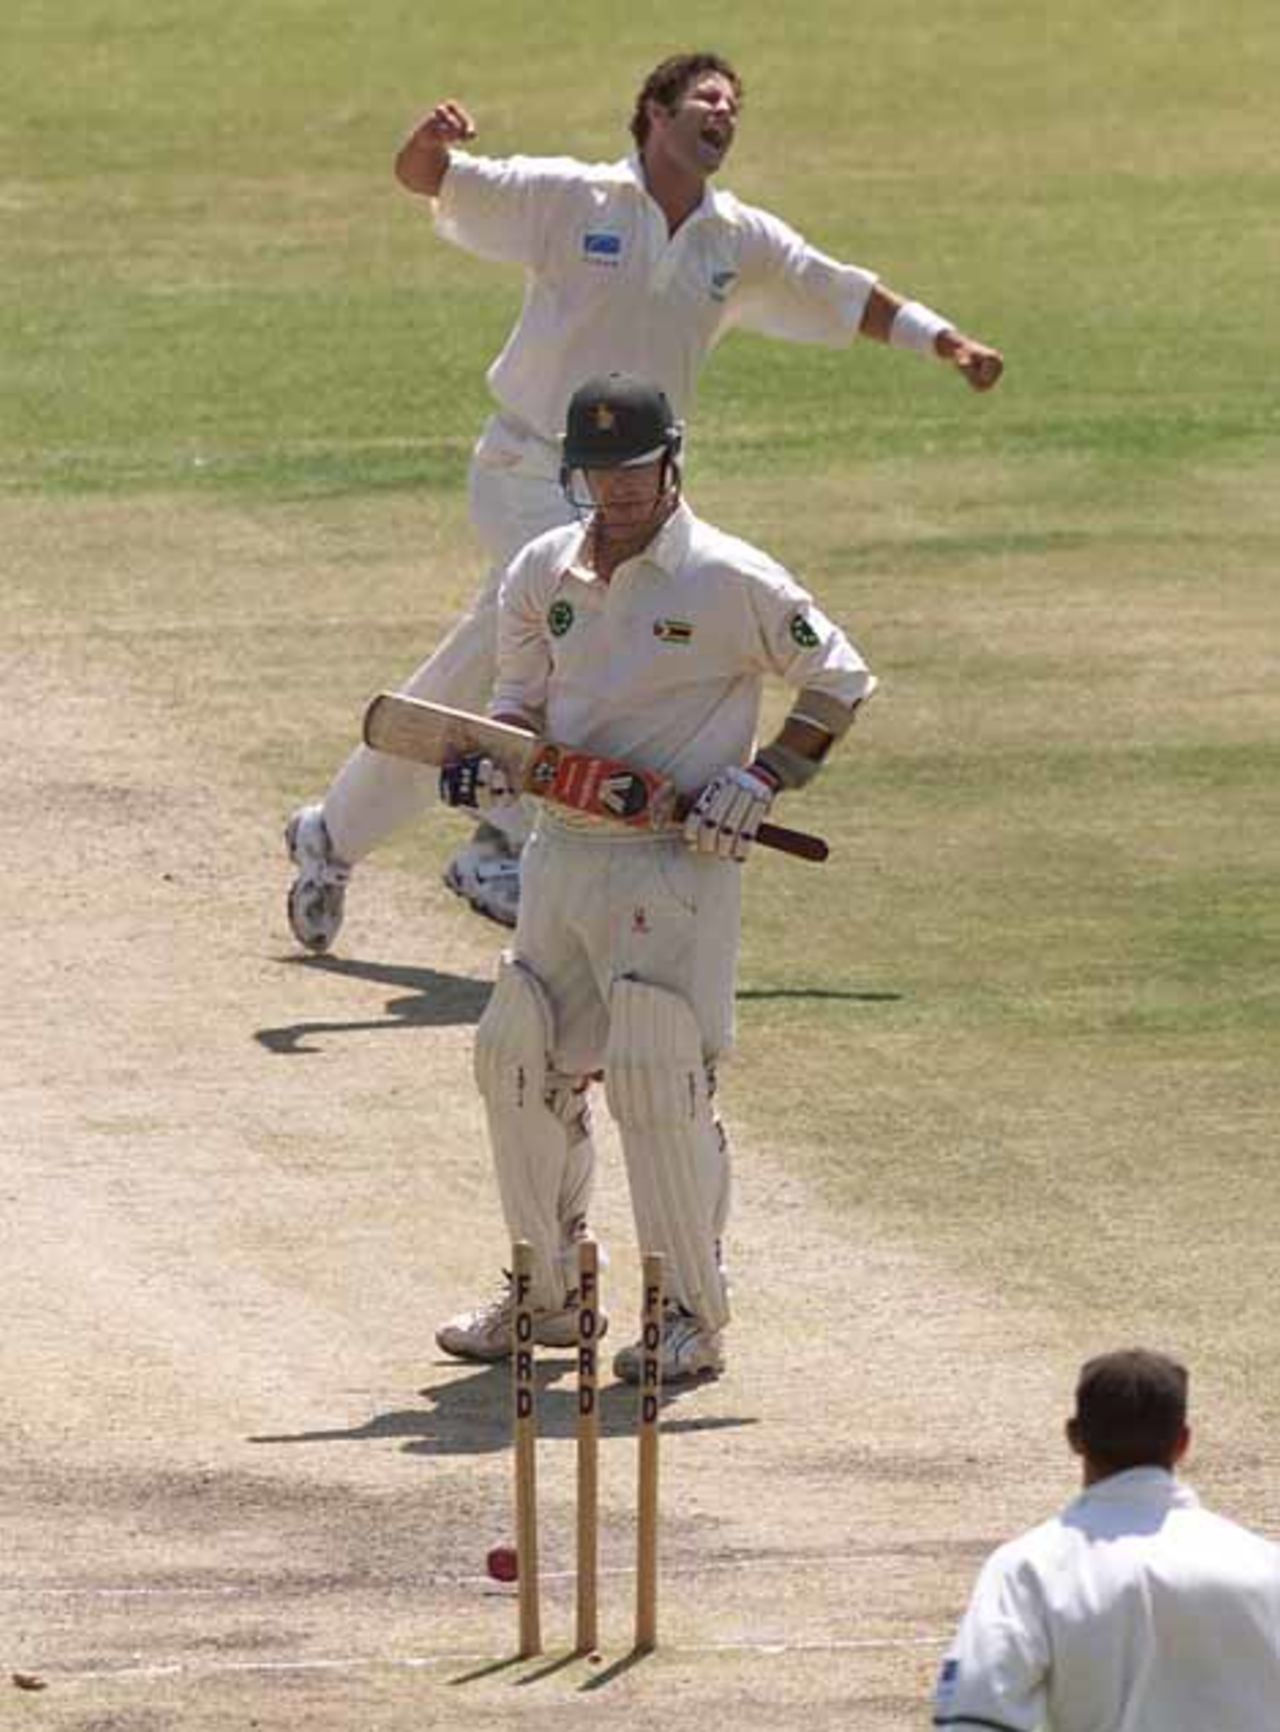 Cairns celebrates the dismissal of Strang, Zimbabwe v New Zealand, 1st Test, 16 Sep 2000